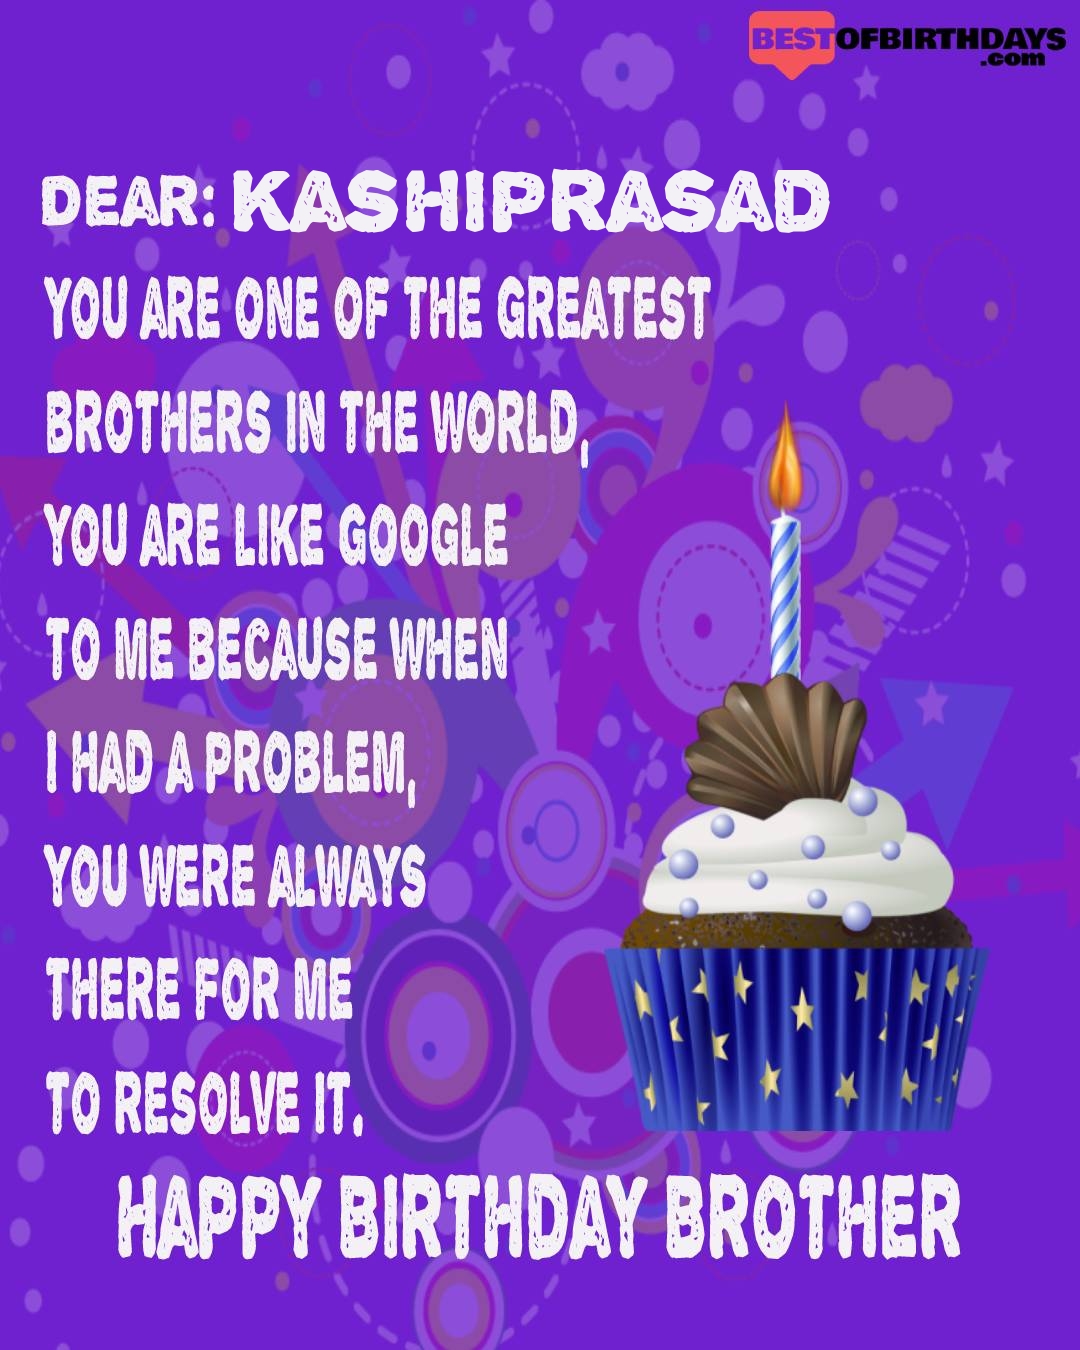 Happy birthday kashiprasad bhai brother bro